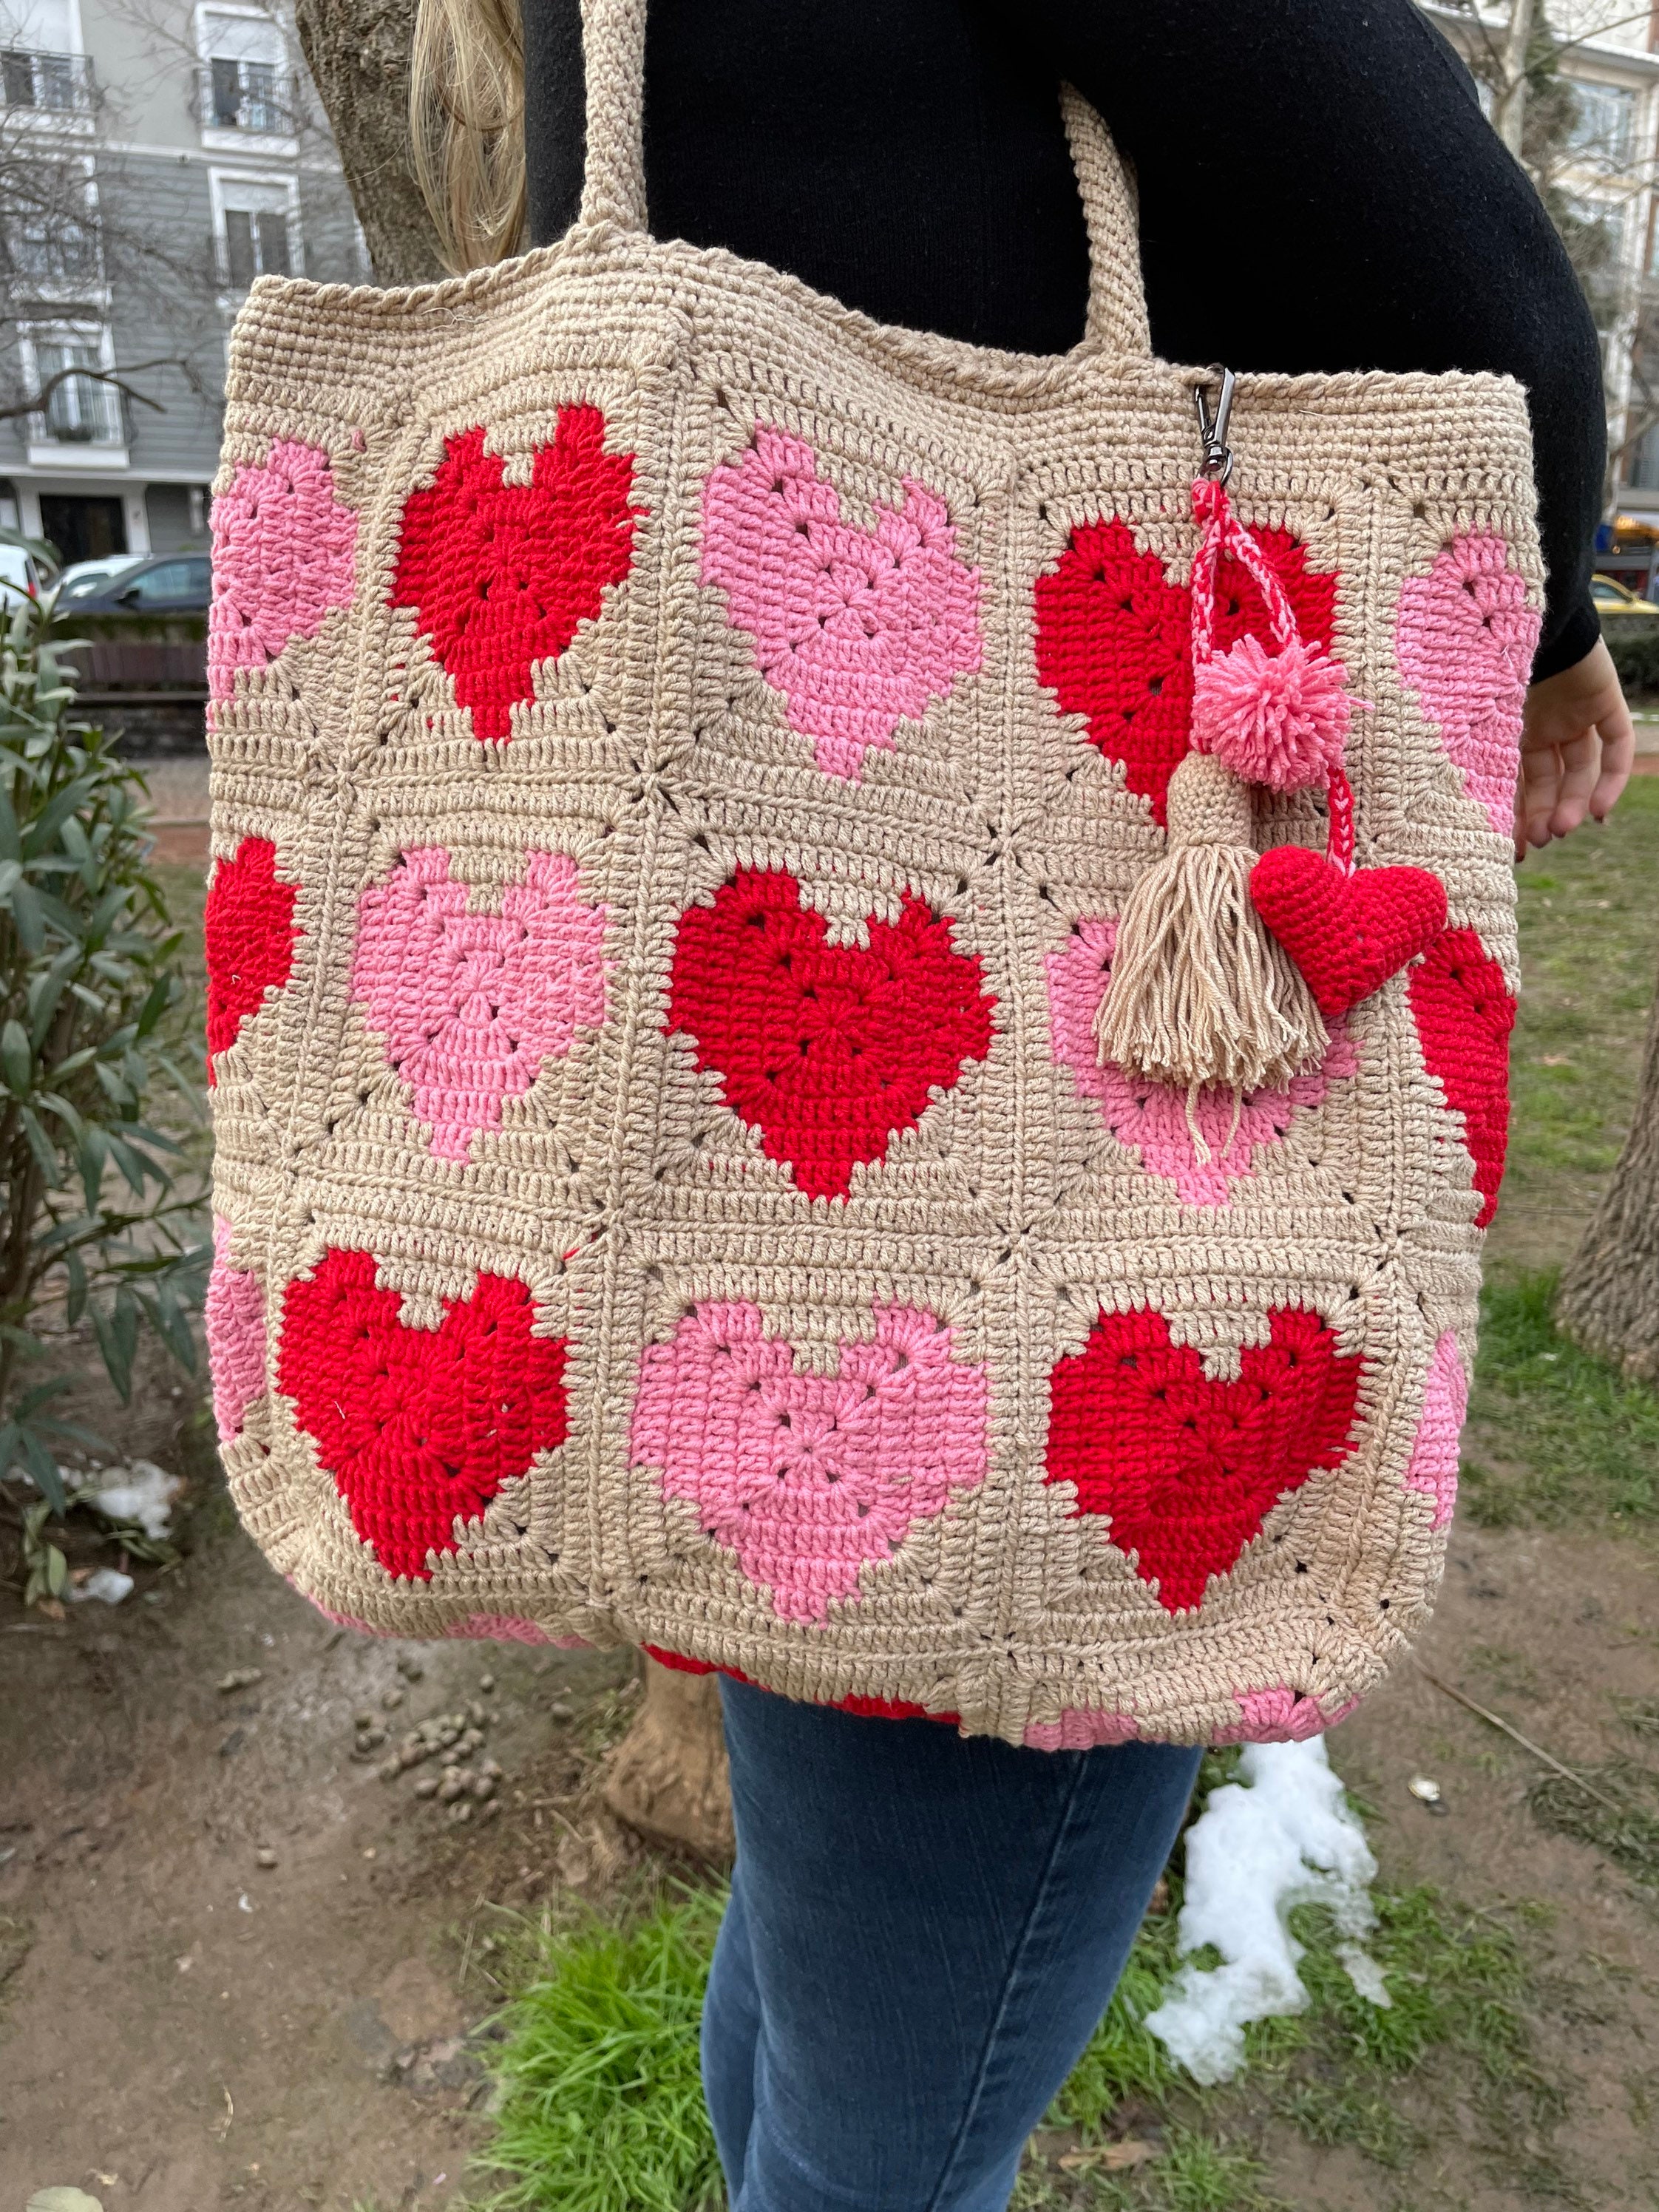 Heart Bag, Crochet Heart Bag,Handmade Heart Bag,Red Heart Bag Purse,Pink Crochet Heart Bag,Heart Purse,Handbag Heart,Heart Shoulder Bag